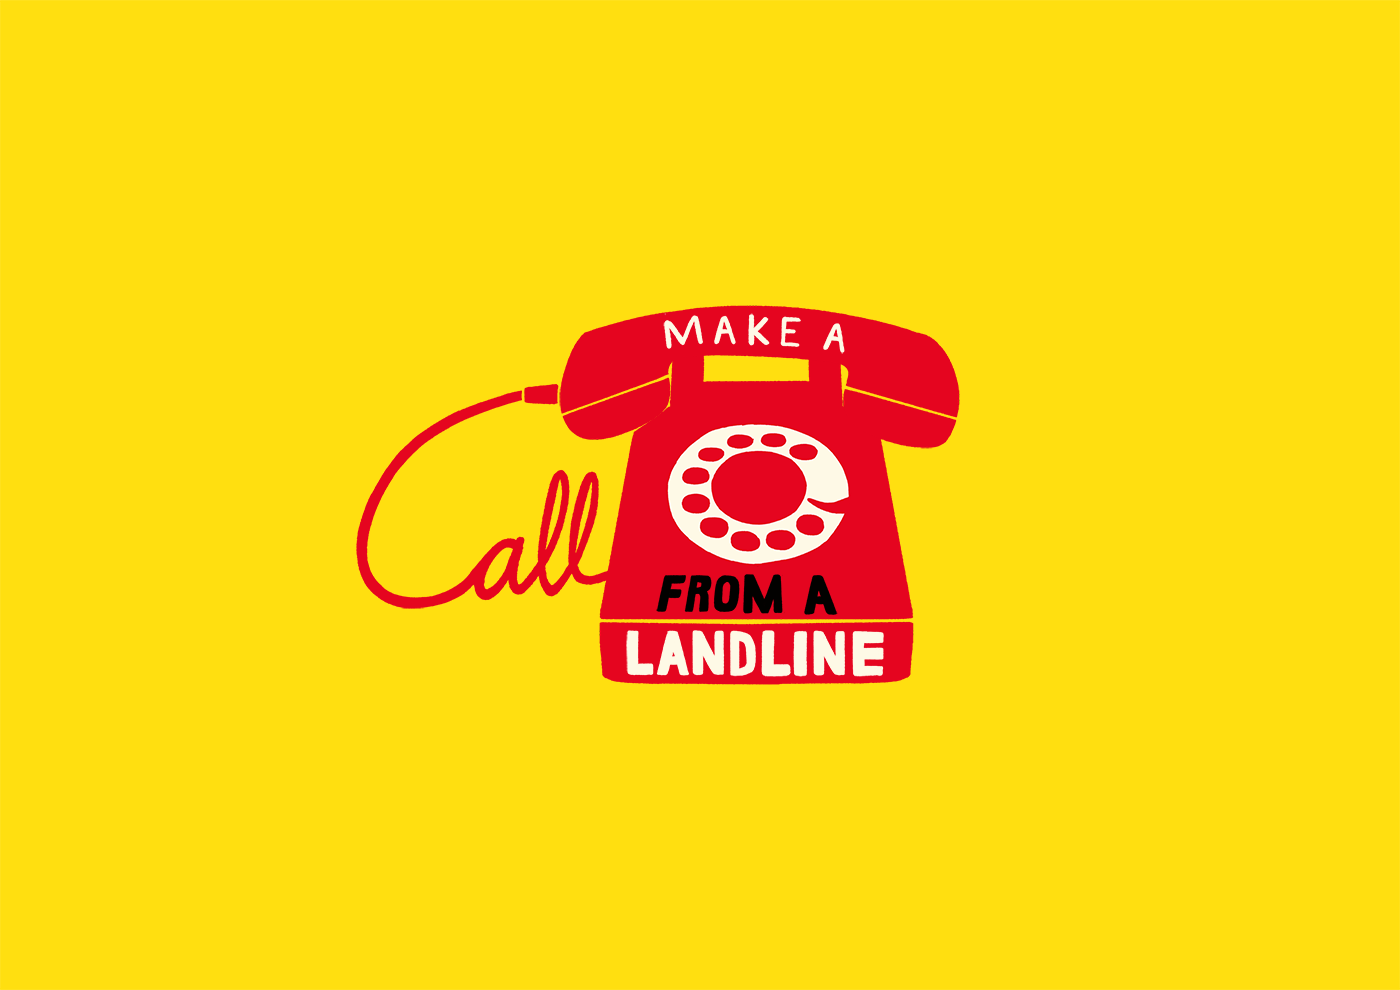 Make a call from a landline